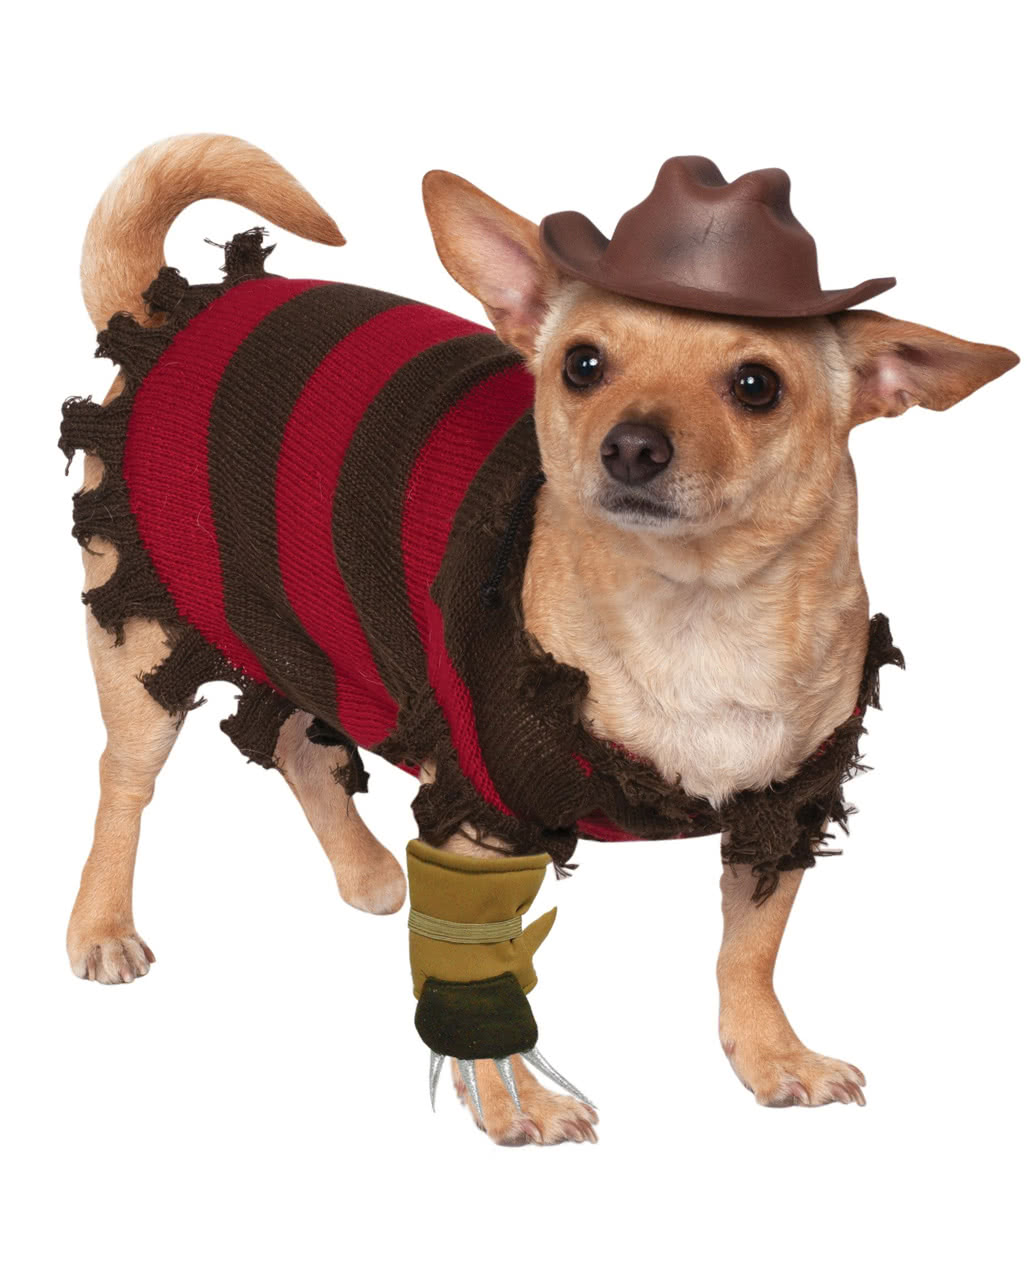 Freddy Krueger Hundekostüm für Halloween